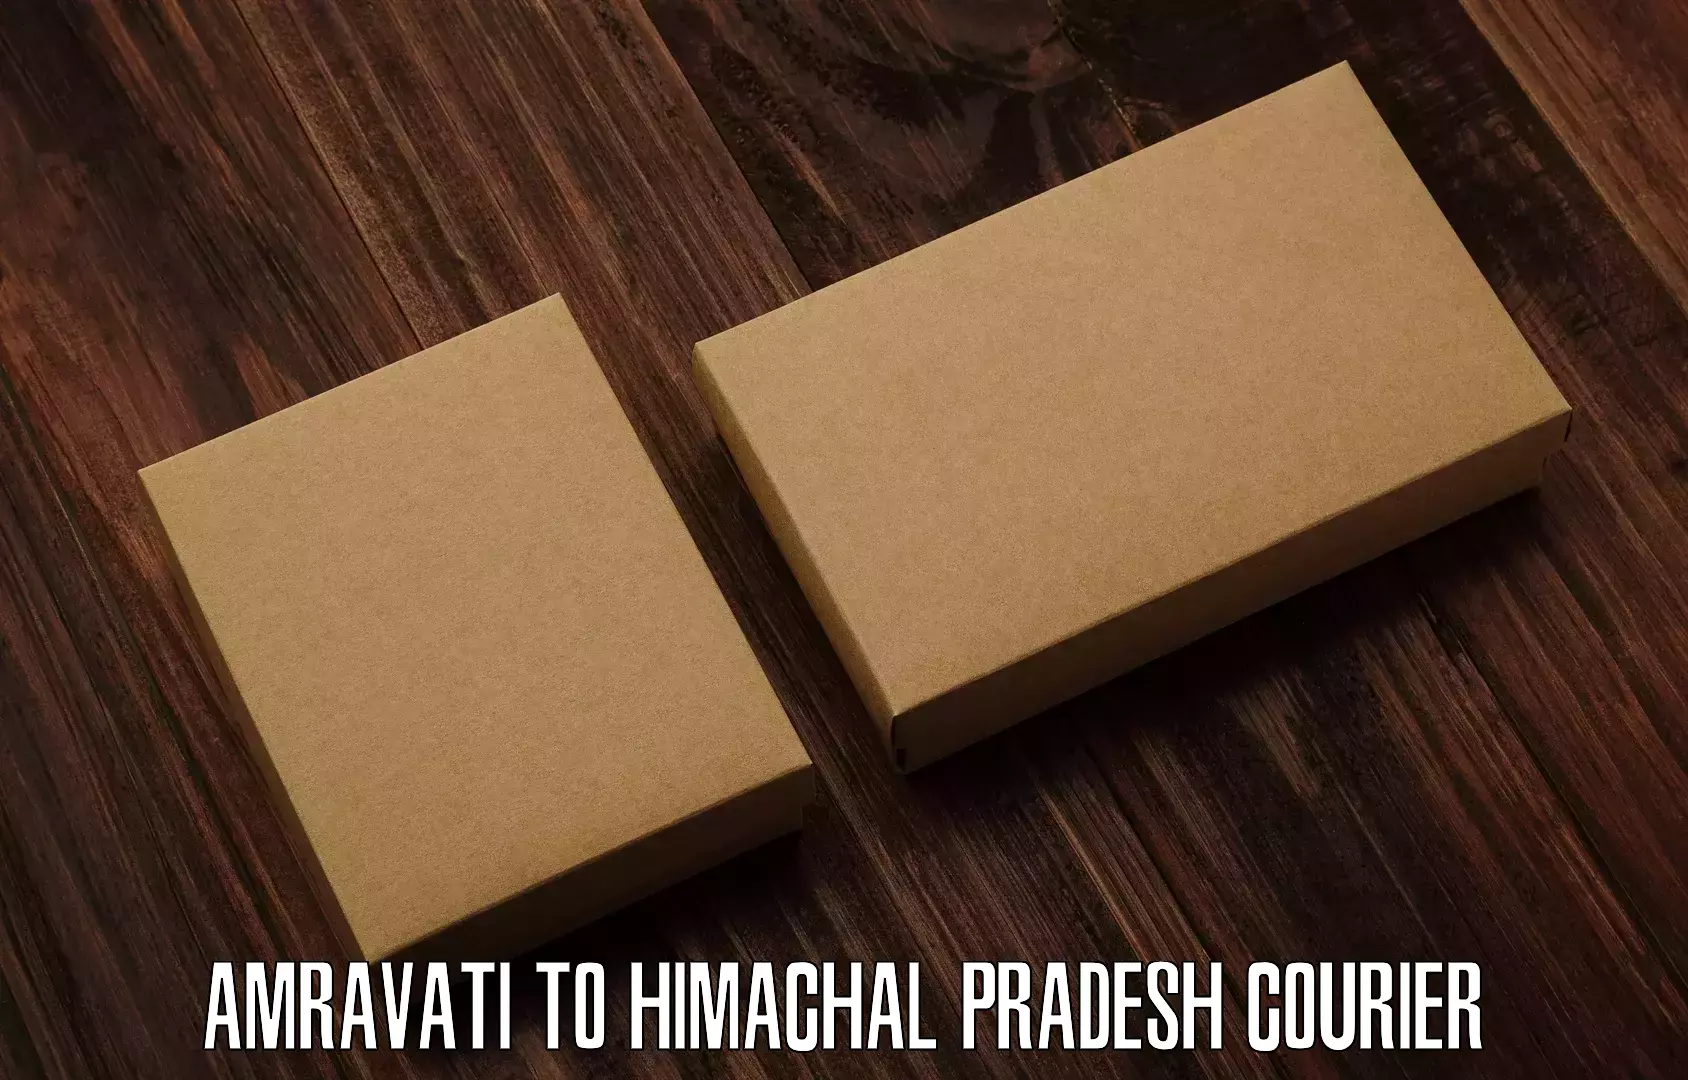 Express logistics providers Amravati to Himachal Pradesh